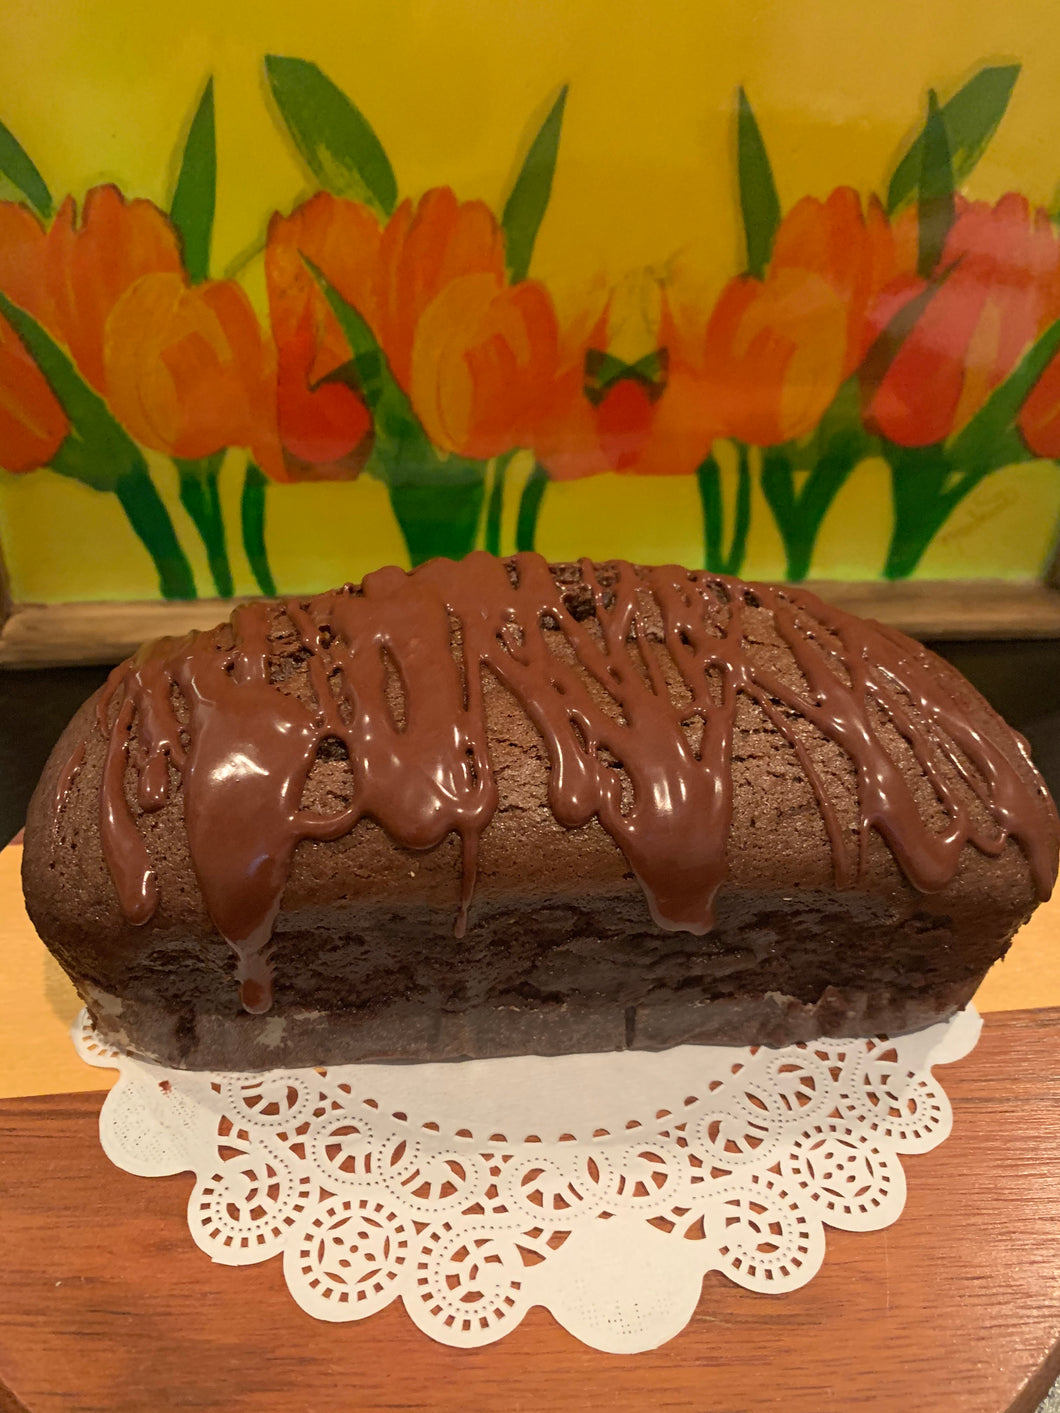 Vegan Chocolate Loaf cake